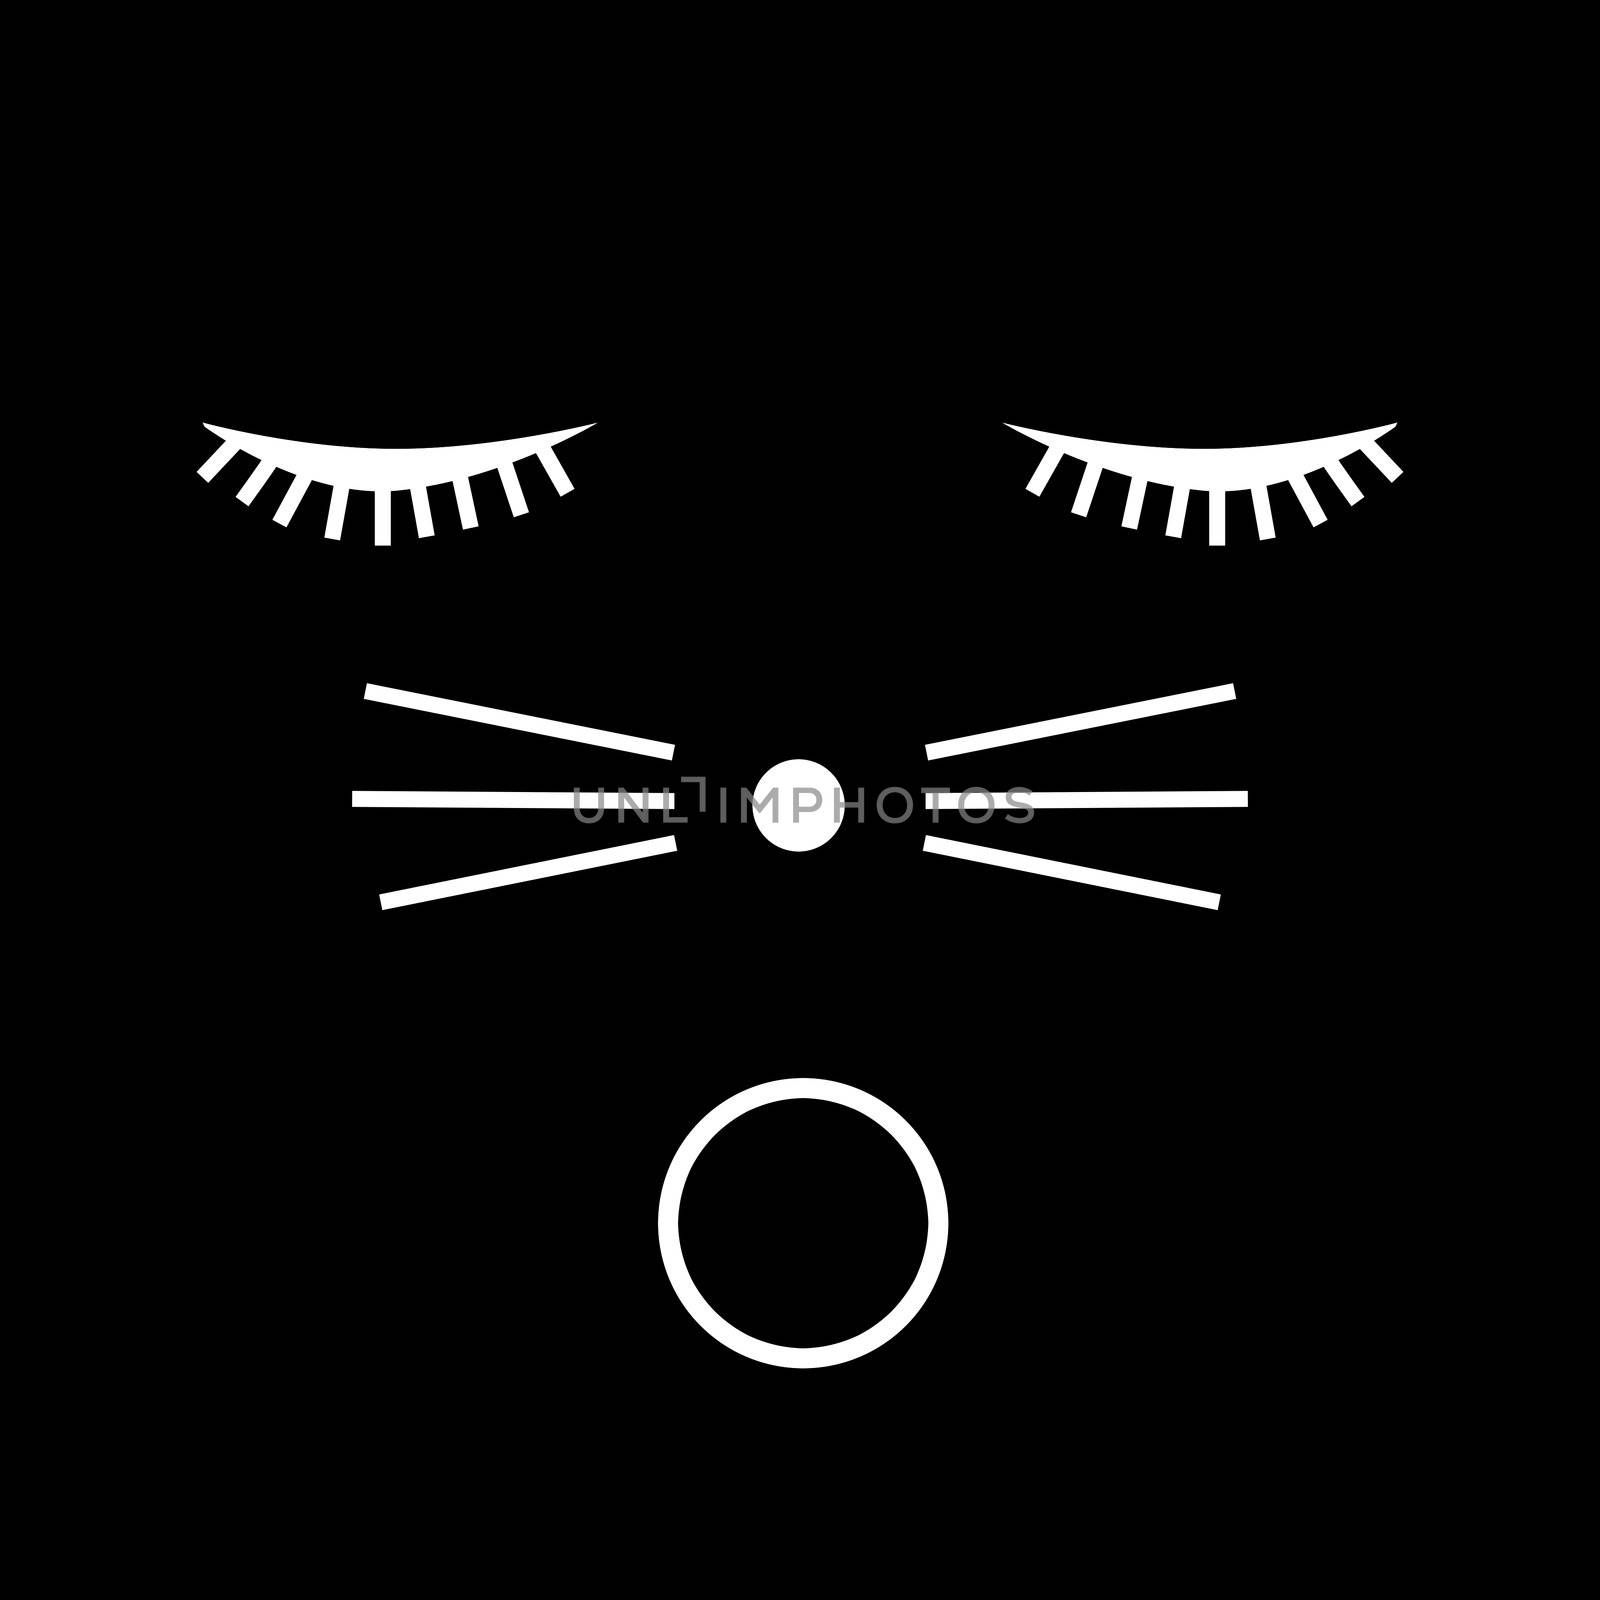 White cat face illustration on black background.